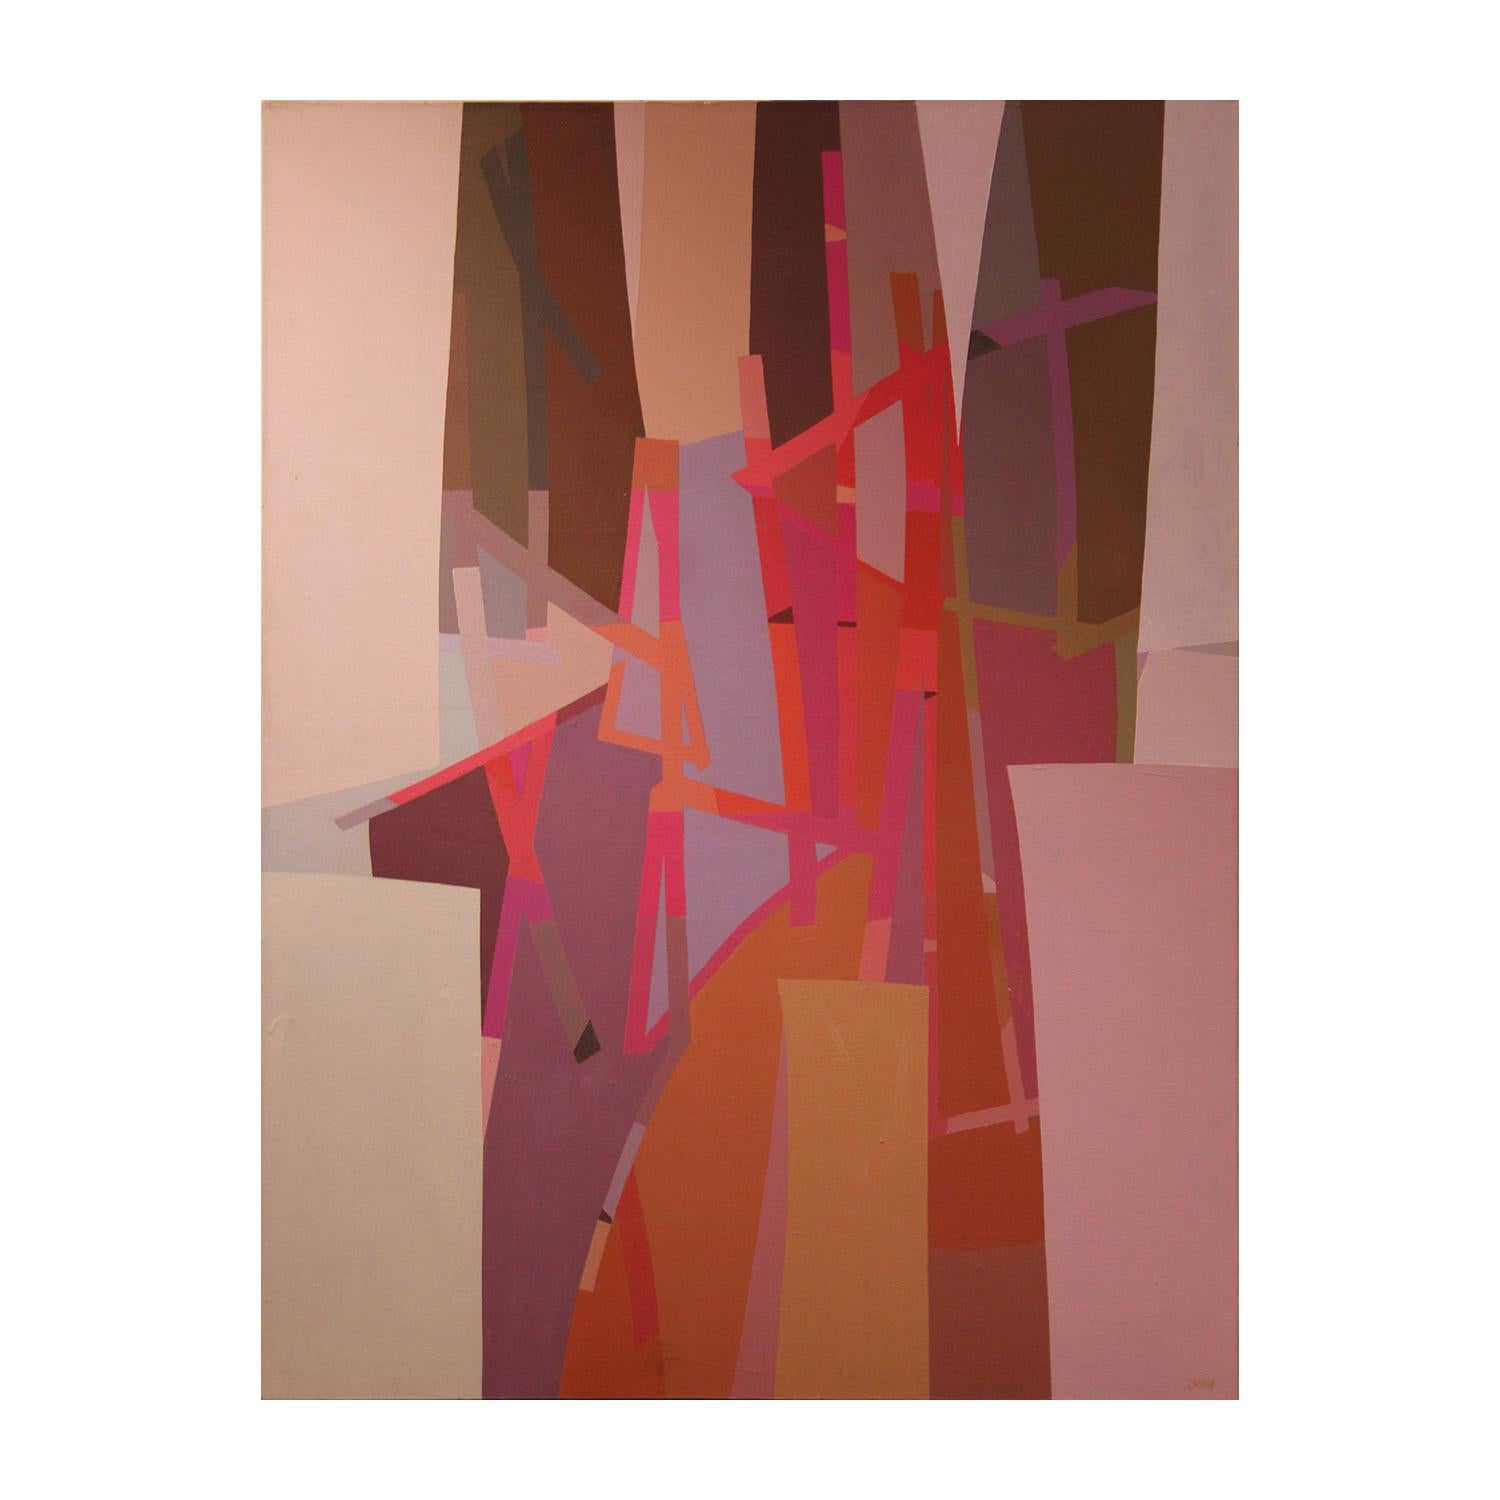 John O'Neil Abstract Painting - "Patacamaya" Cubist Pink Large Abstract